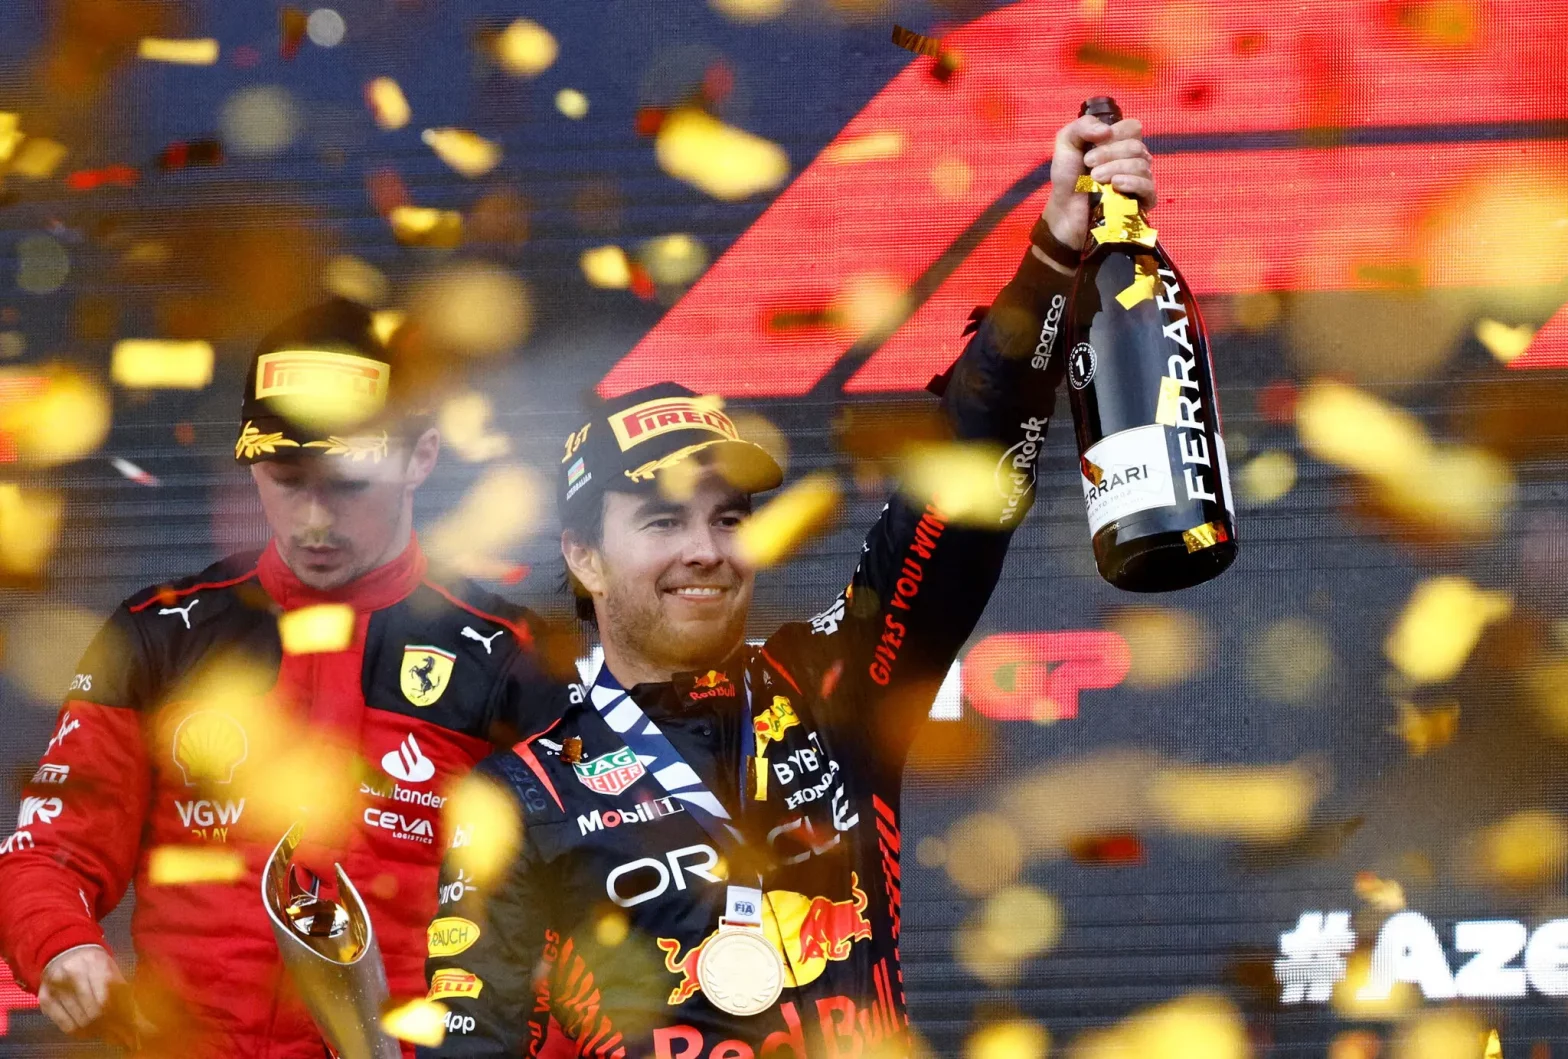 Sergio Pérez Wins as Red Bull Dominates Again